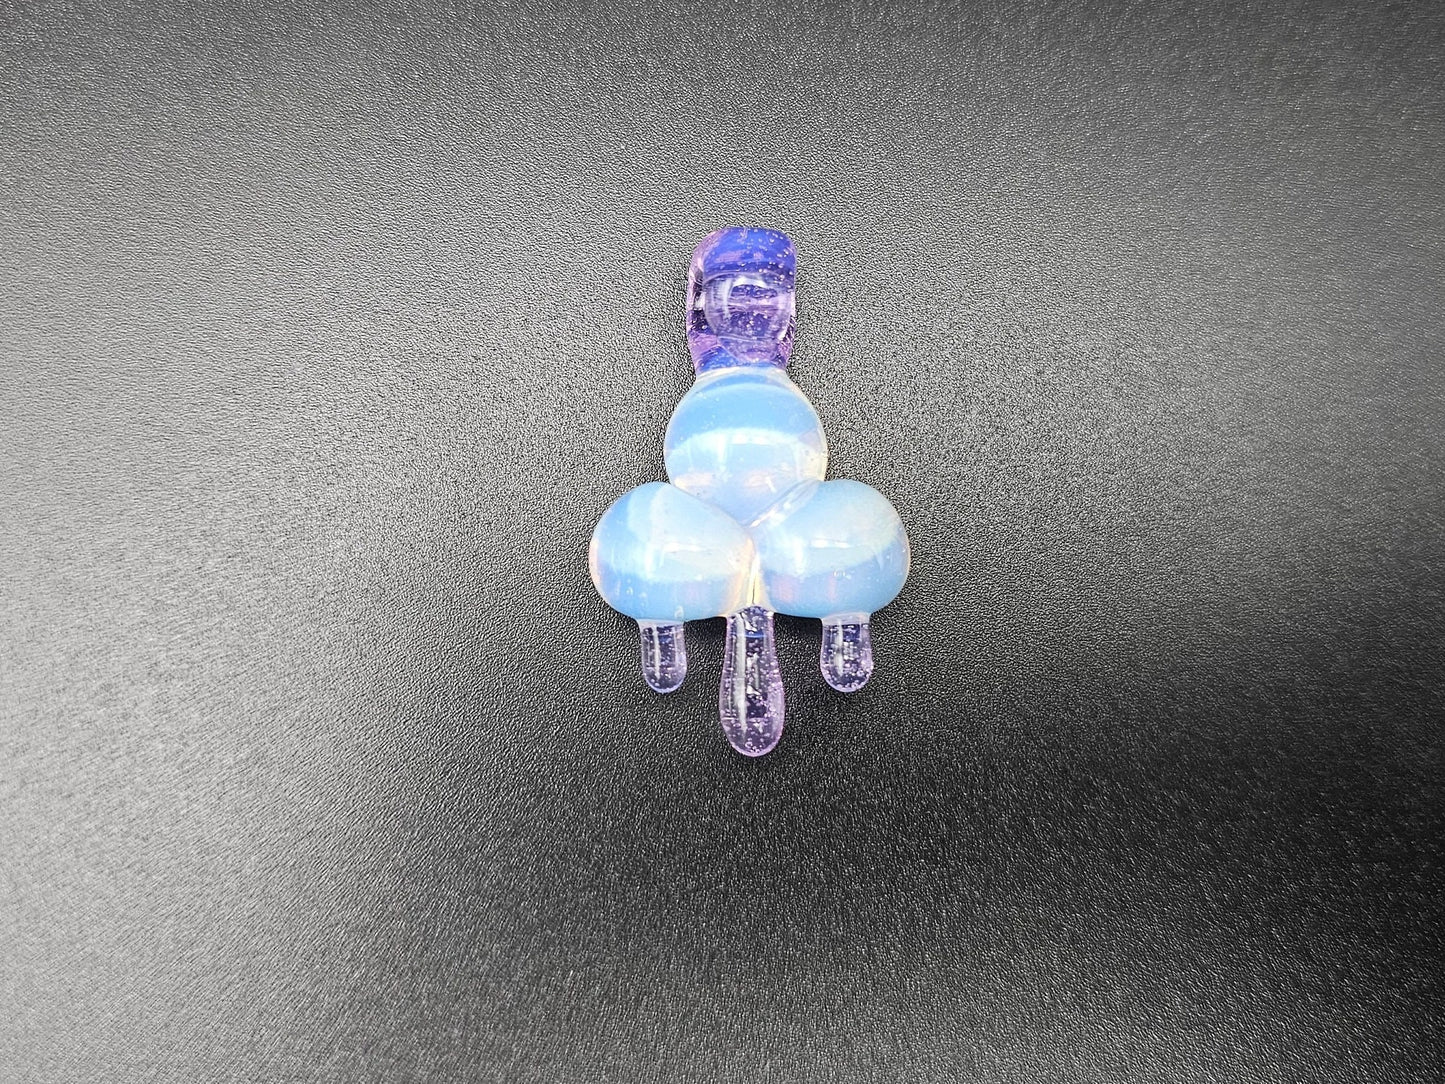 Glass Rain Cloud Pendant/ Cloud pendant / Hand Sculpted Glass Cloud Necklace / Glass Rain Cloud Pendant